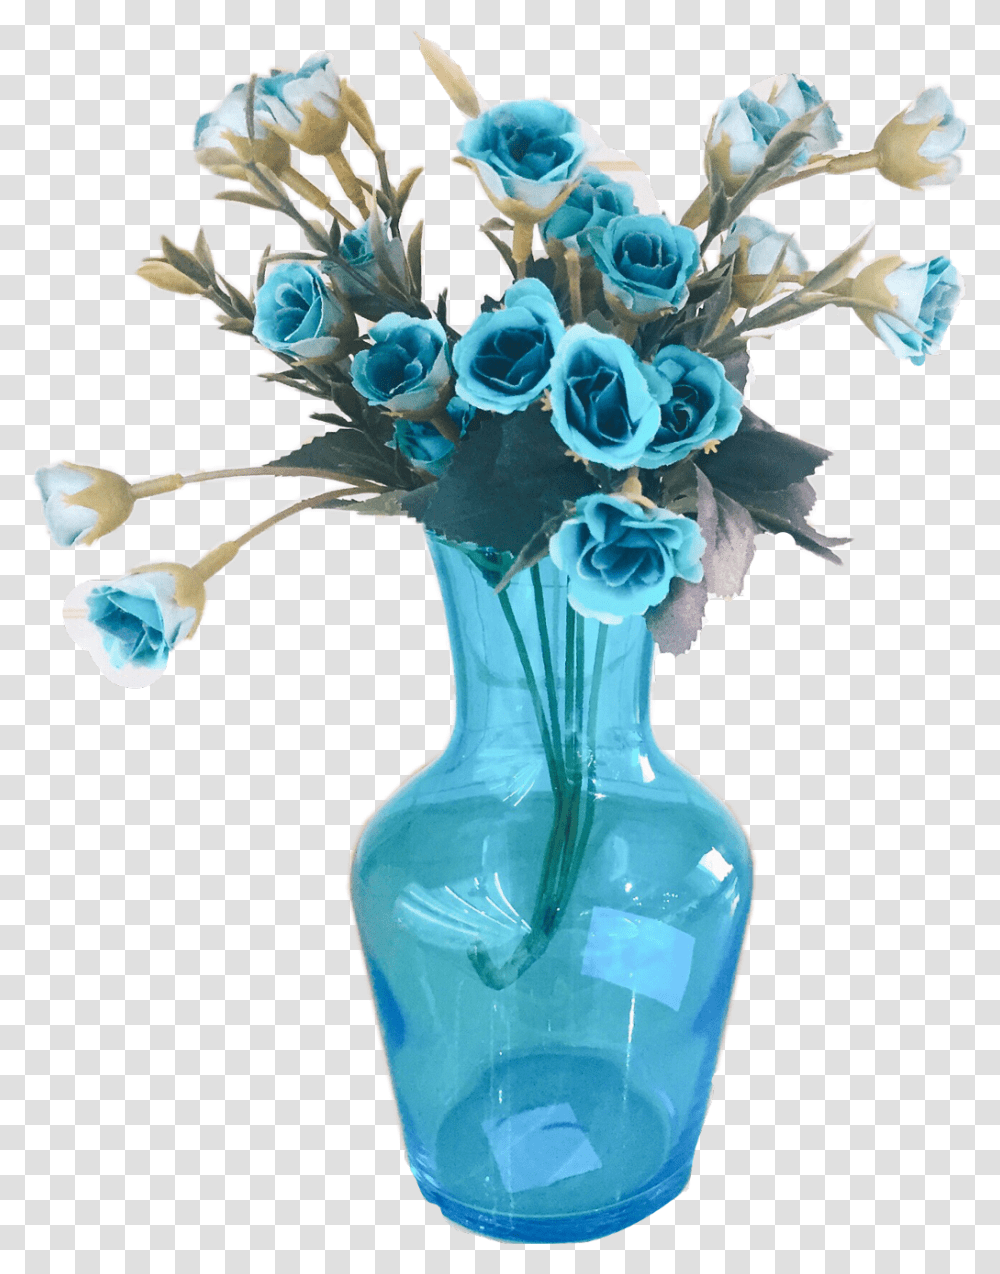 Teal Turquoise Blue Glass Vase Flowers Decor Garden Roses, Jar, Pottery, Porcelain Transparent Png